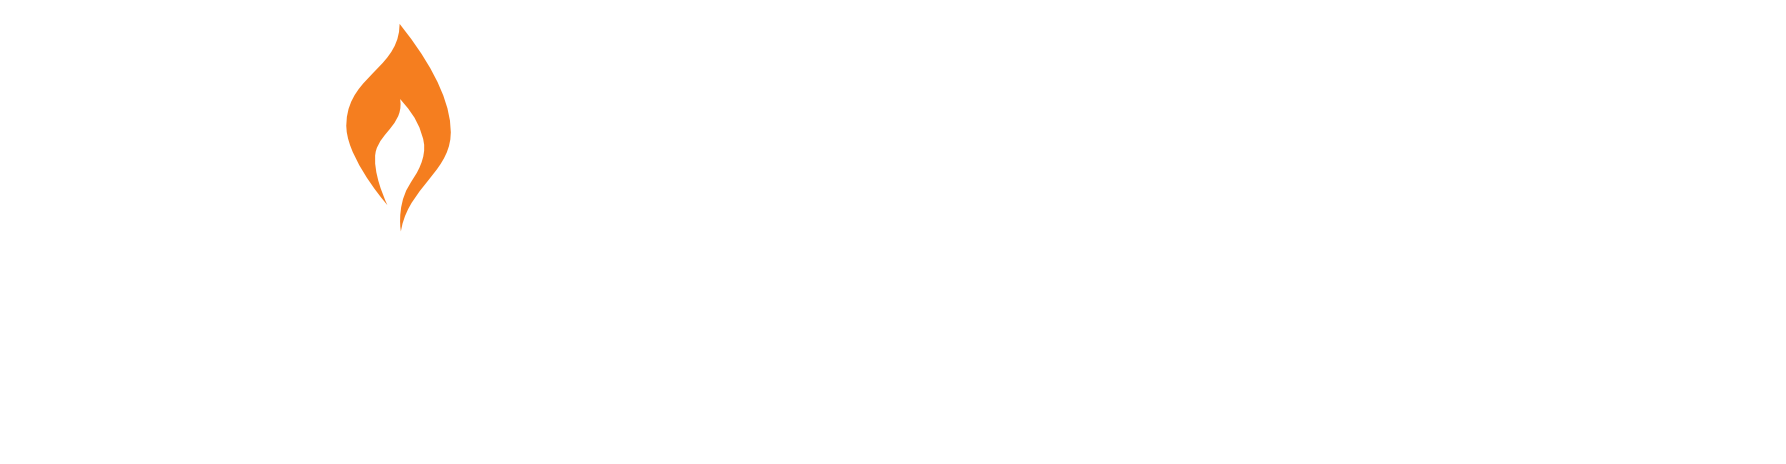 Ghana Cylinder Manufacturing Company